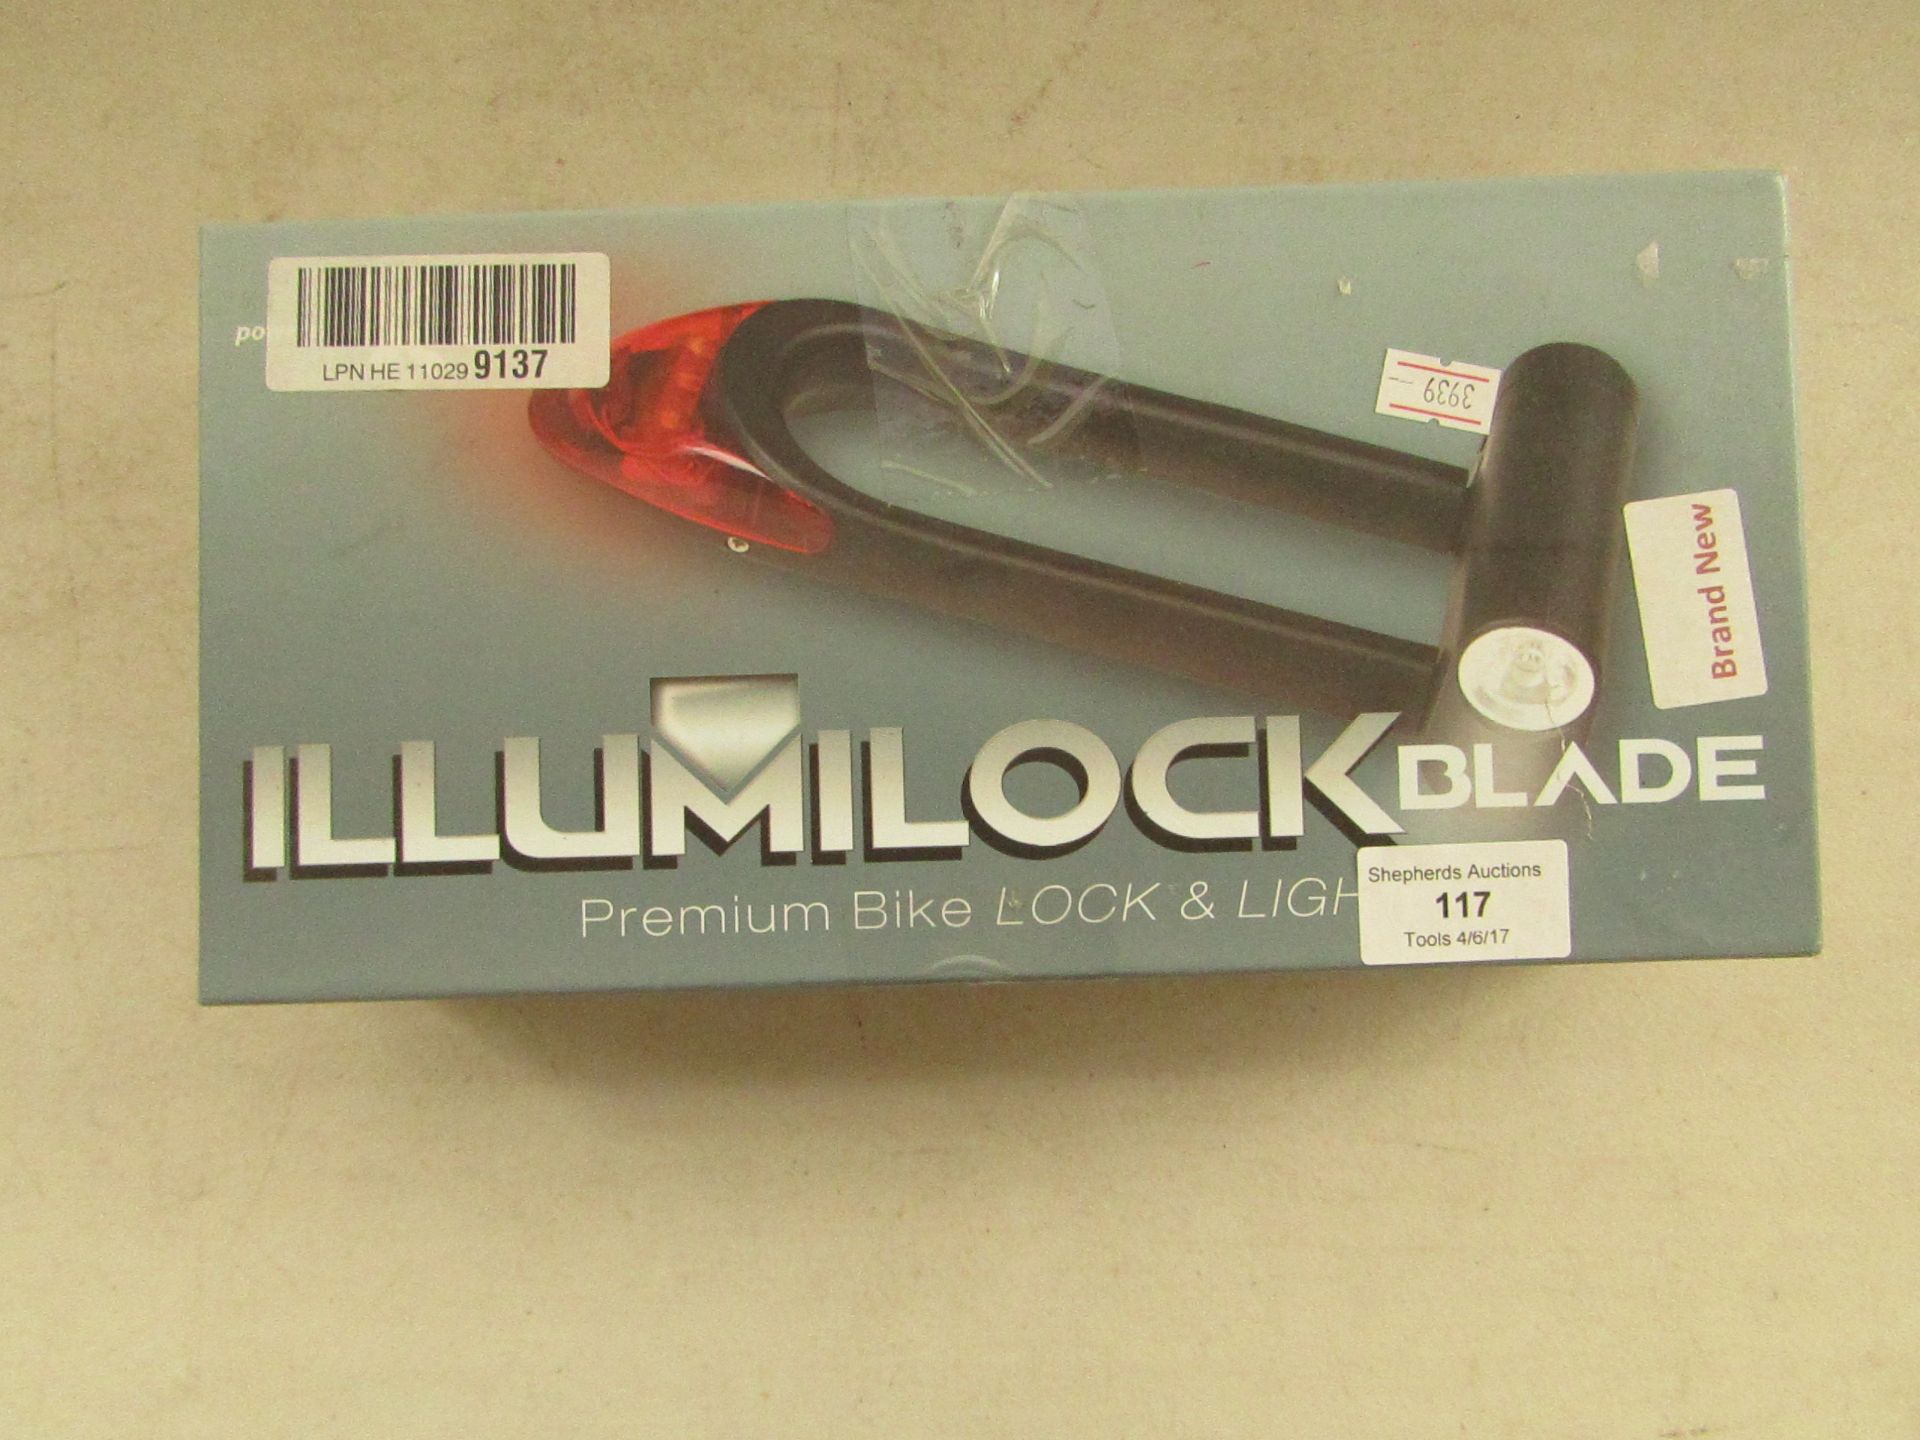 Illumilock blade bike lock and light, new and boxed.